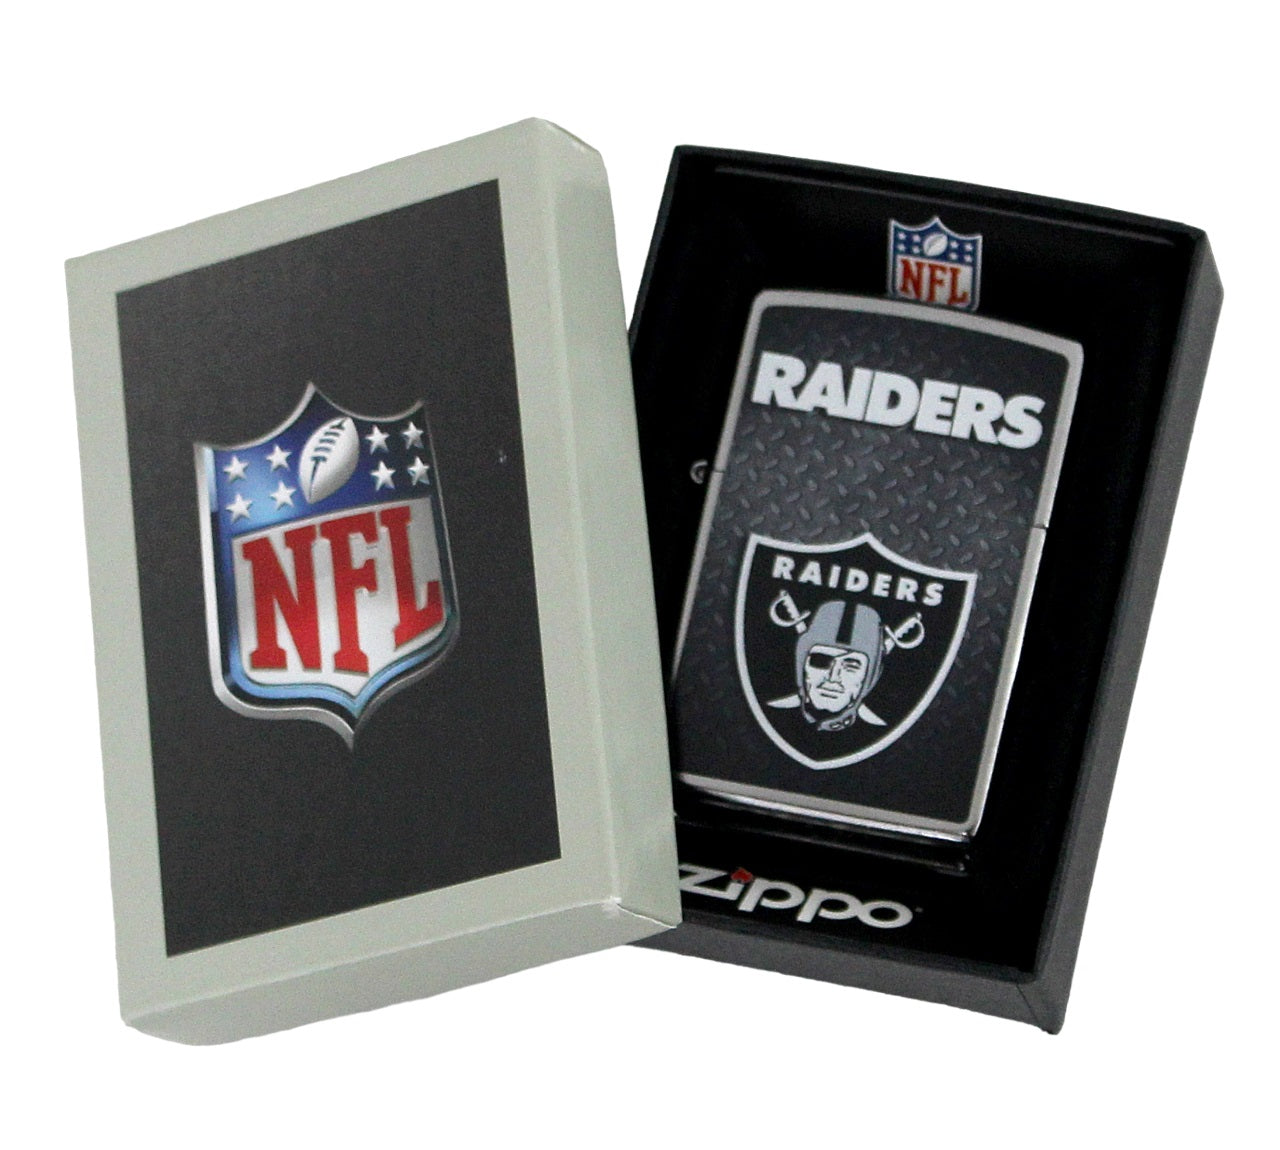 Zippo Lighter - NFL Raiders $34.95